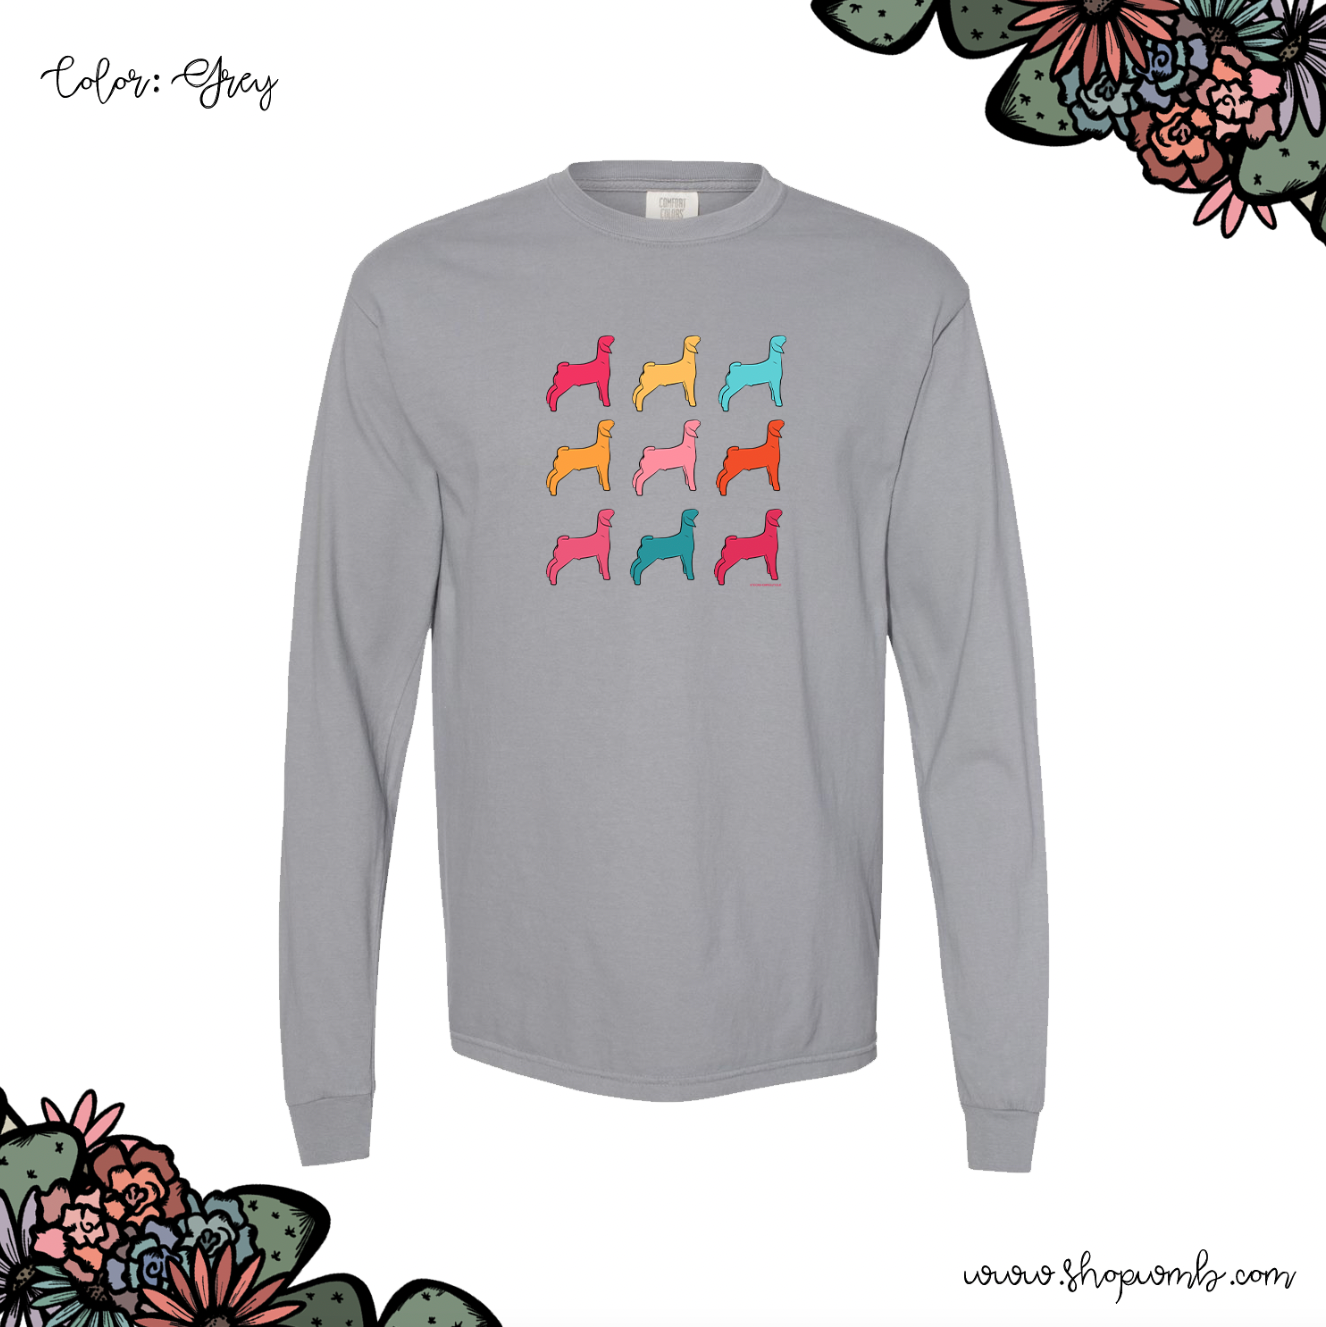 Colorful Goat LONG SLEEVE T-Shirt (S-3XL) - Multiple Colors!